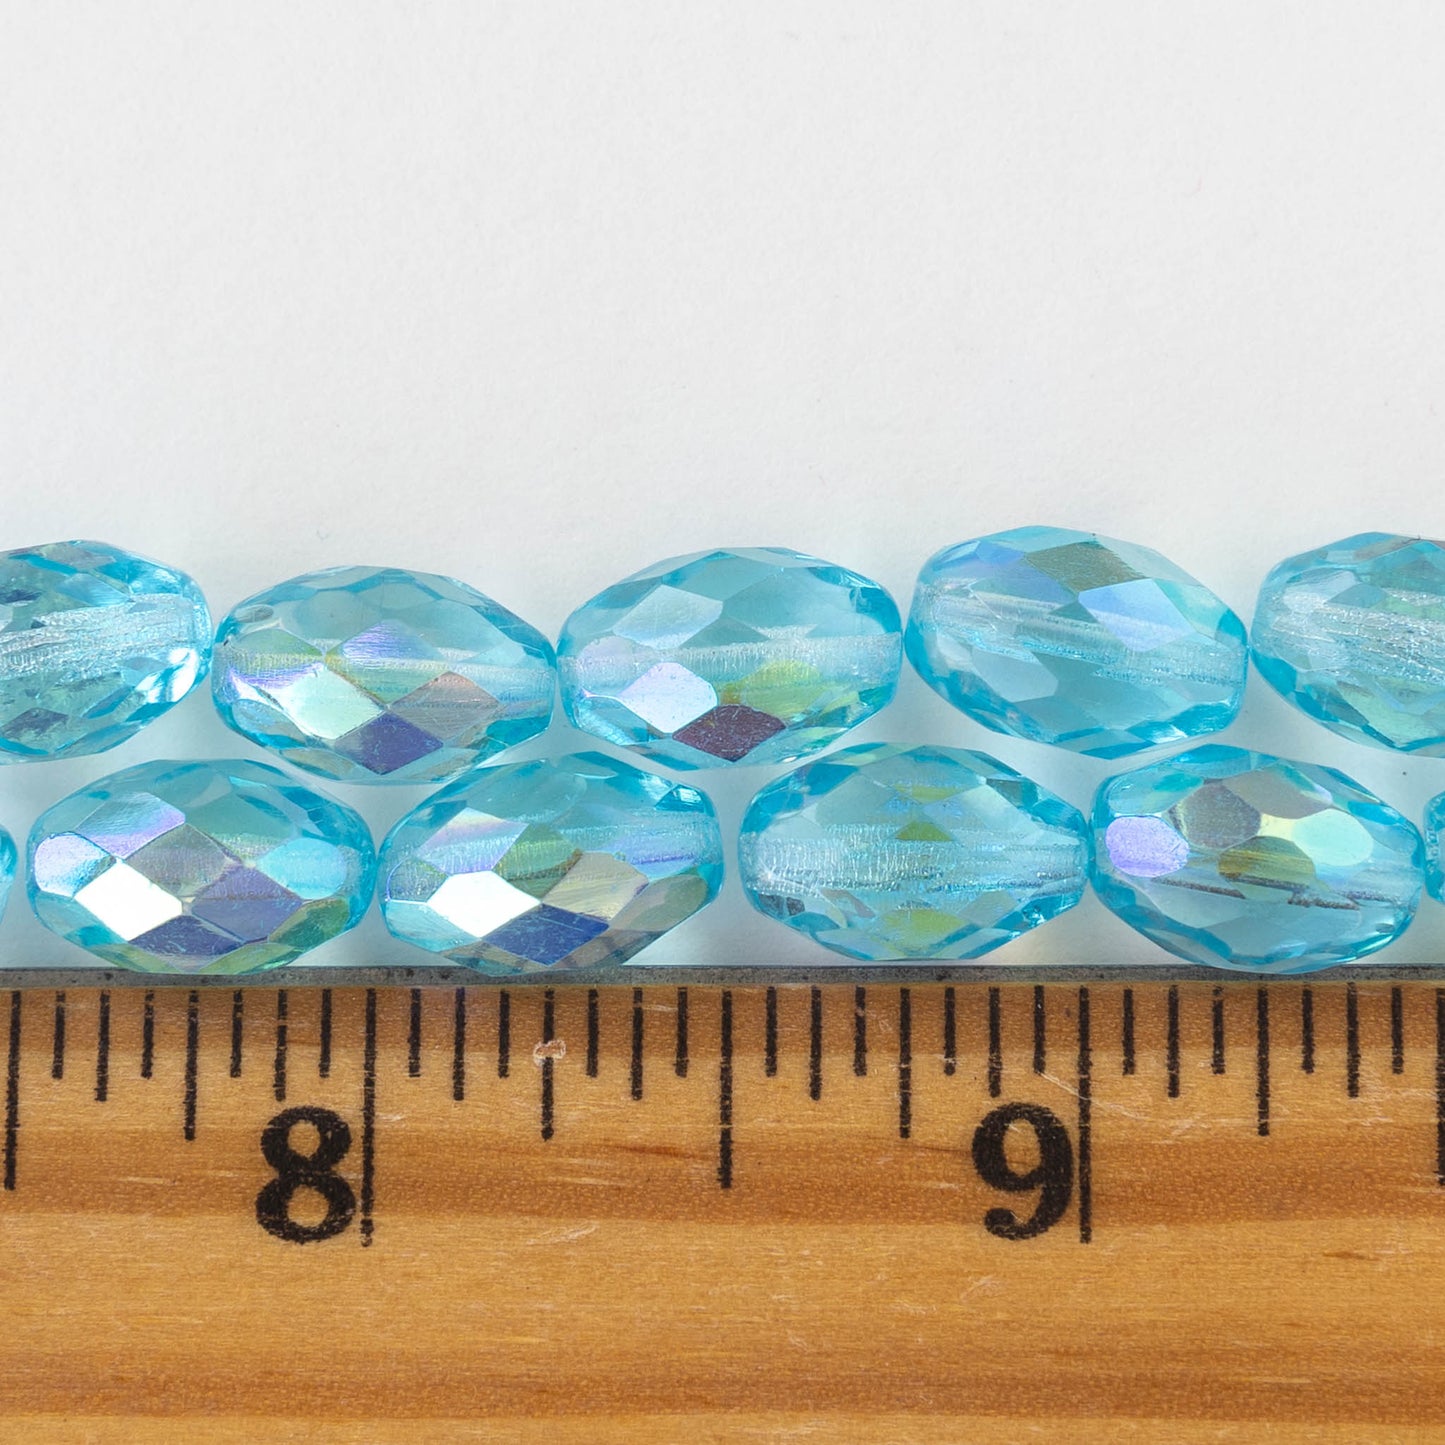 12x8mm Oval Beads - Aquamarine Blue AB- 12 beads